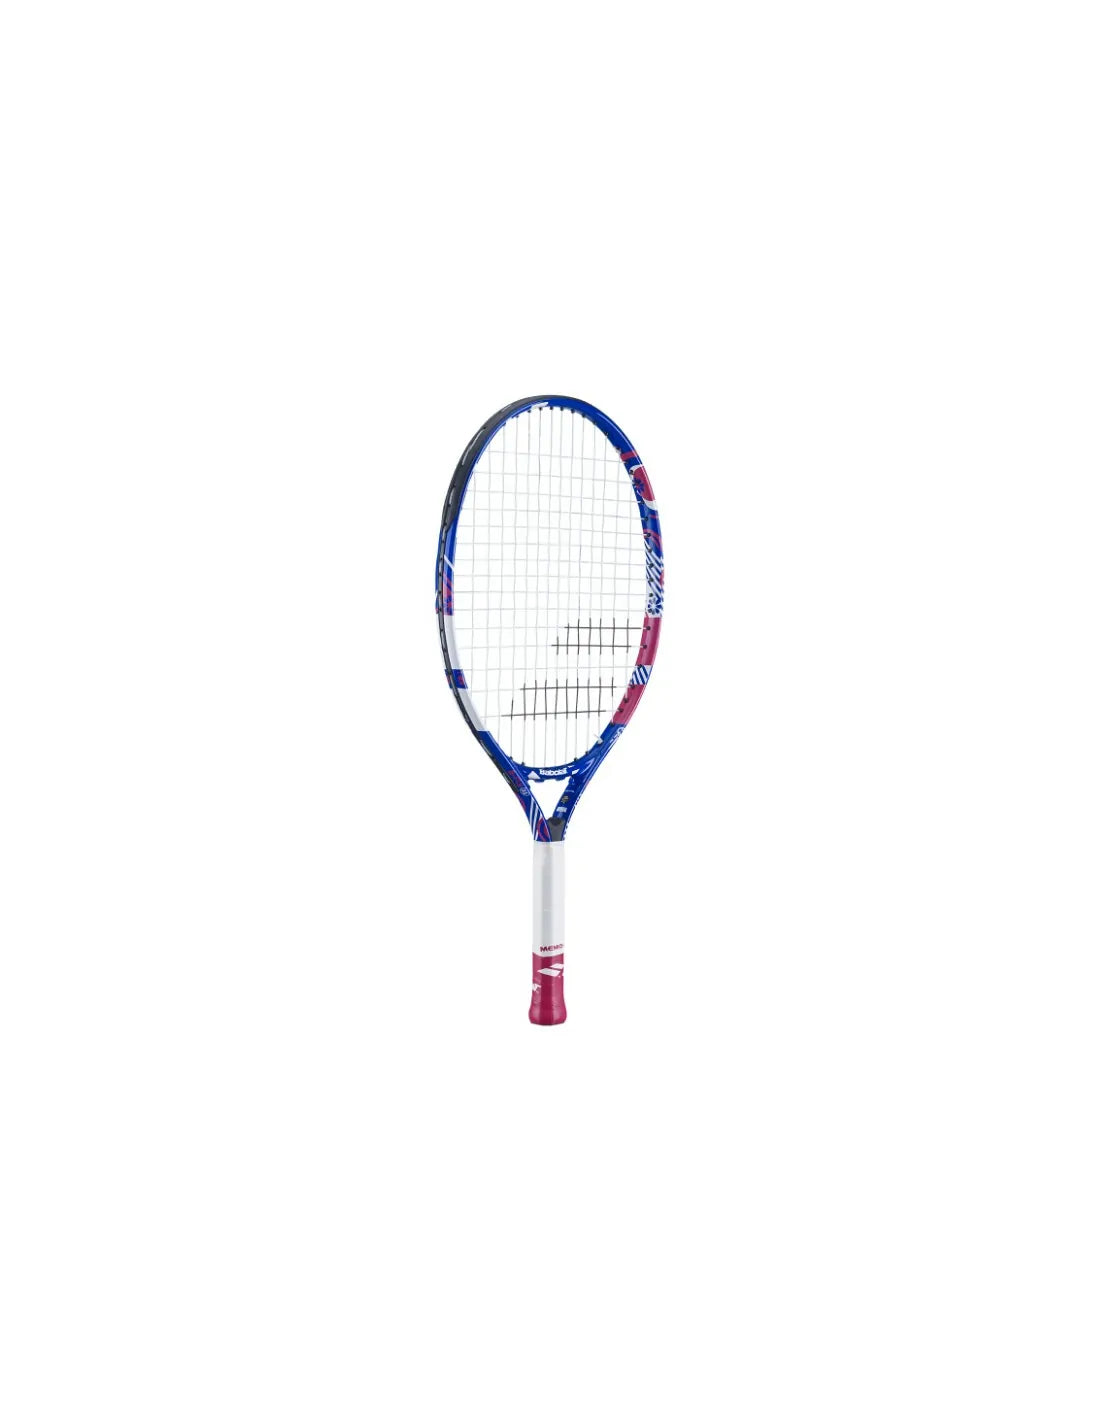 B-Fly Junior 21 Inch Tennis Racket